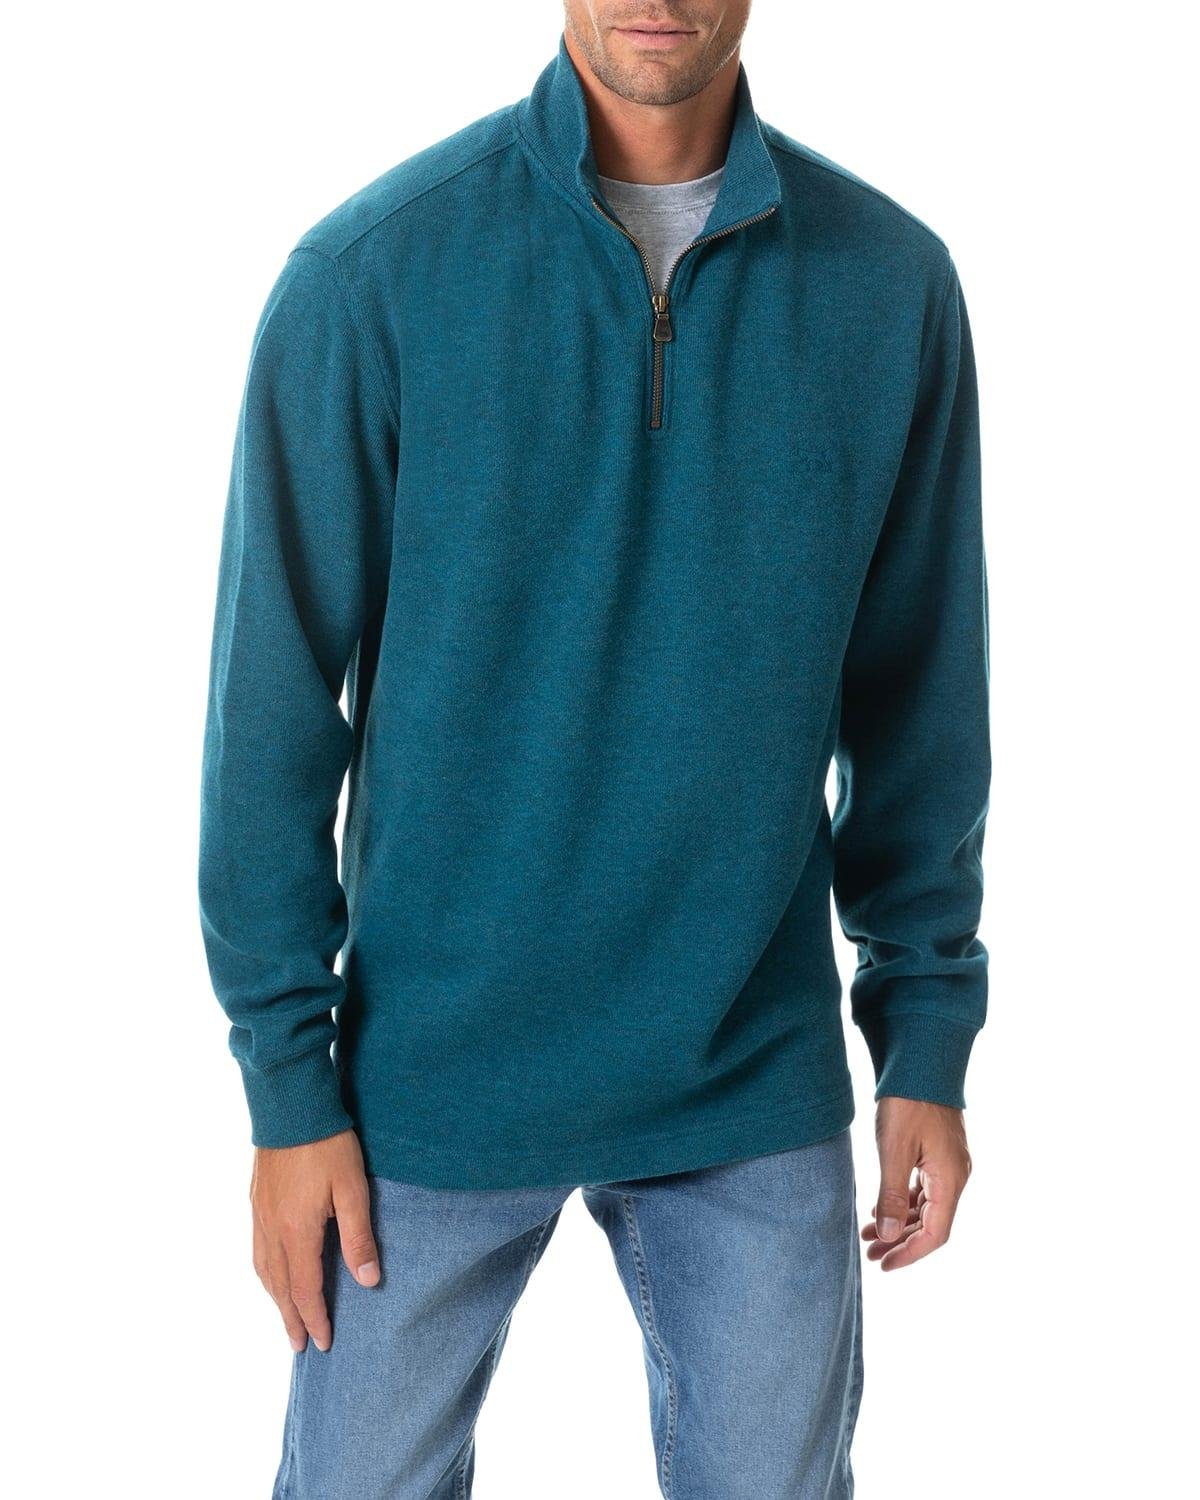 Men's Alton Ave Quarter-Zip Sweater by RODD&GUNN